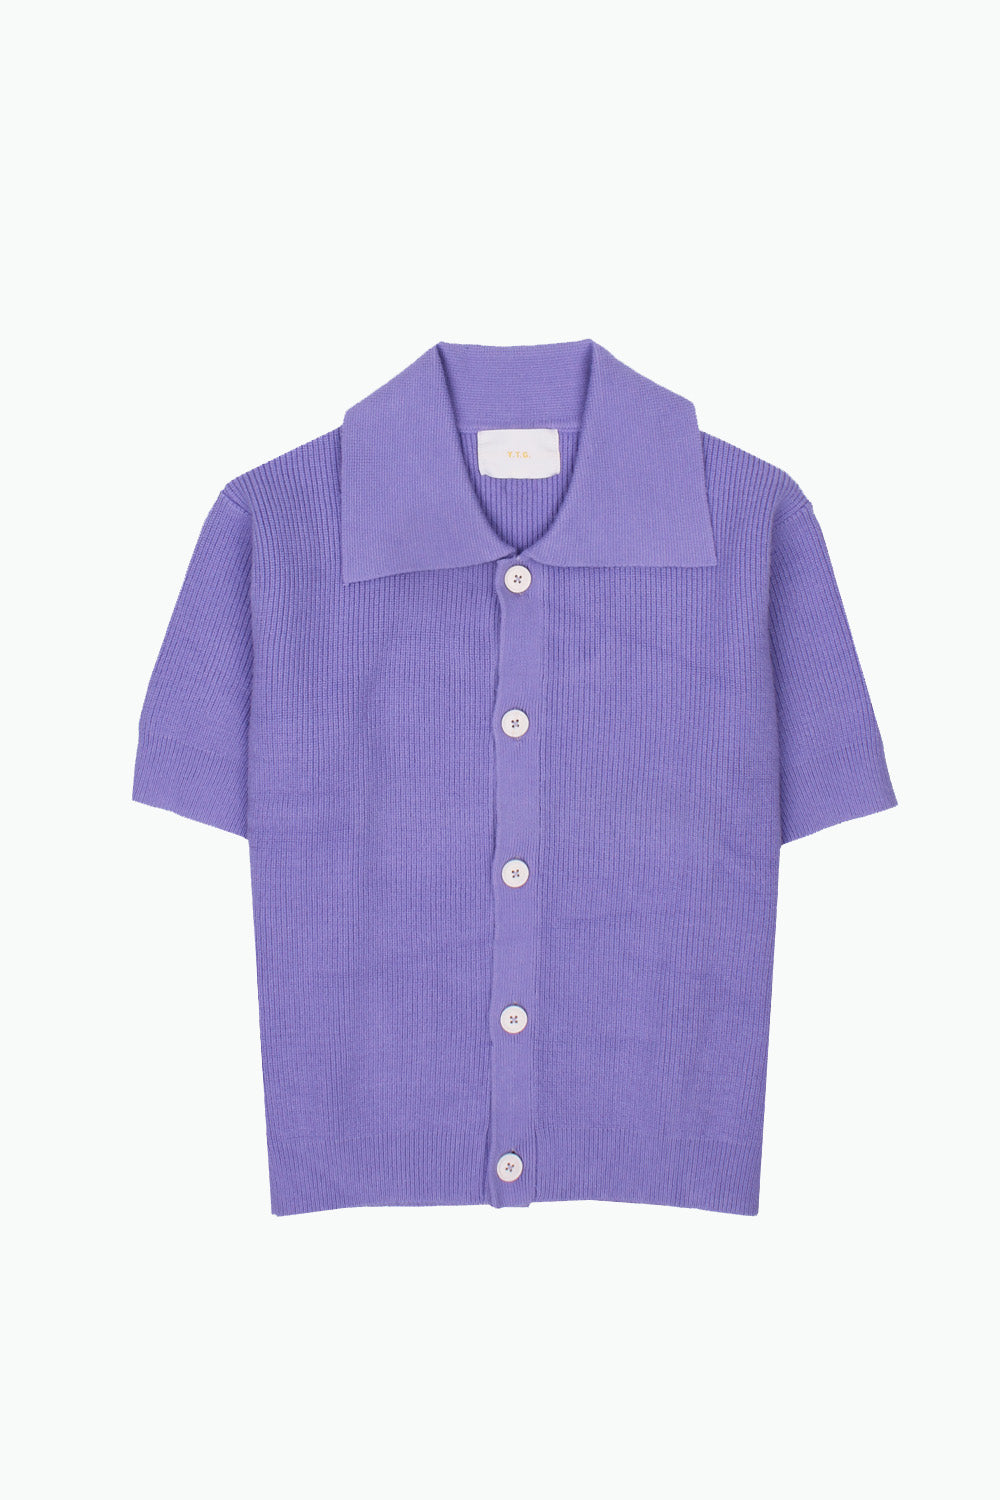 Solid Lavender Short Sleeve Cardigan